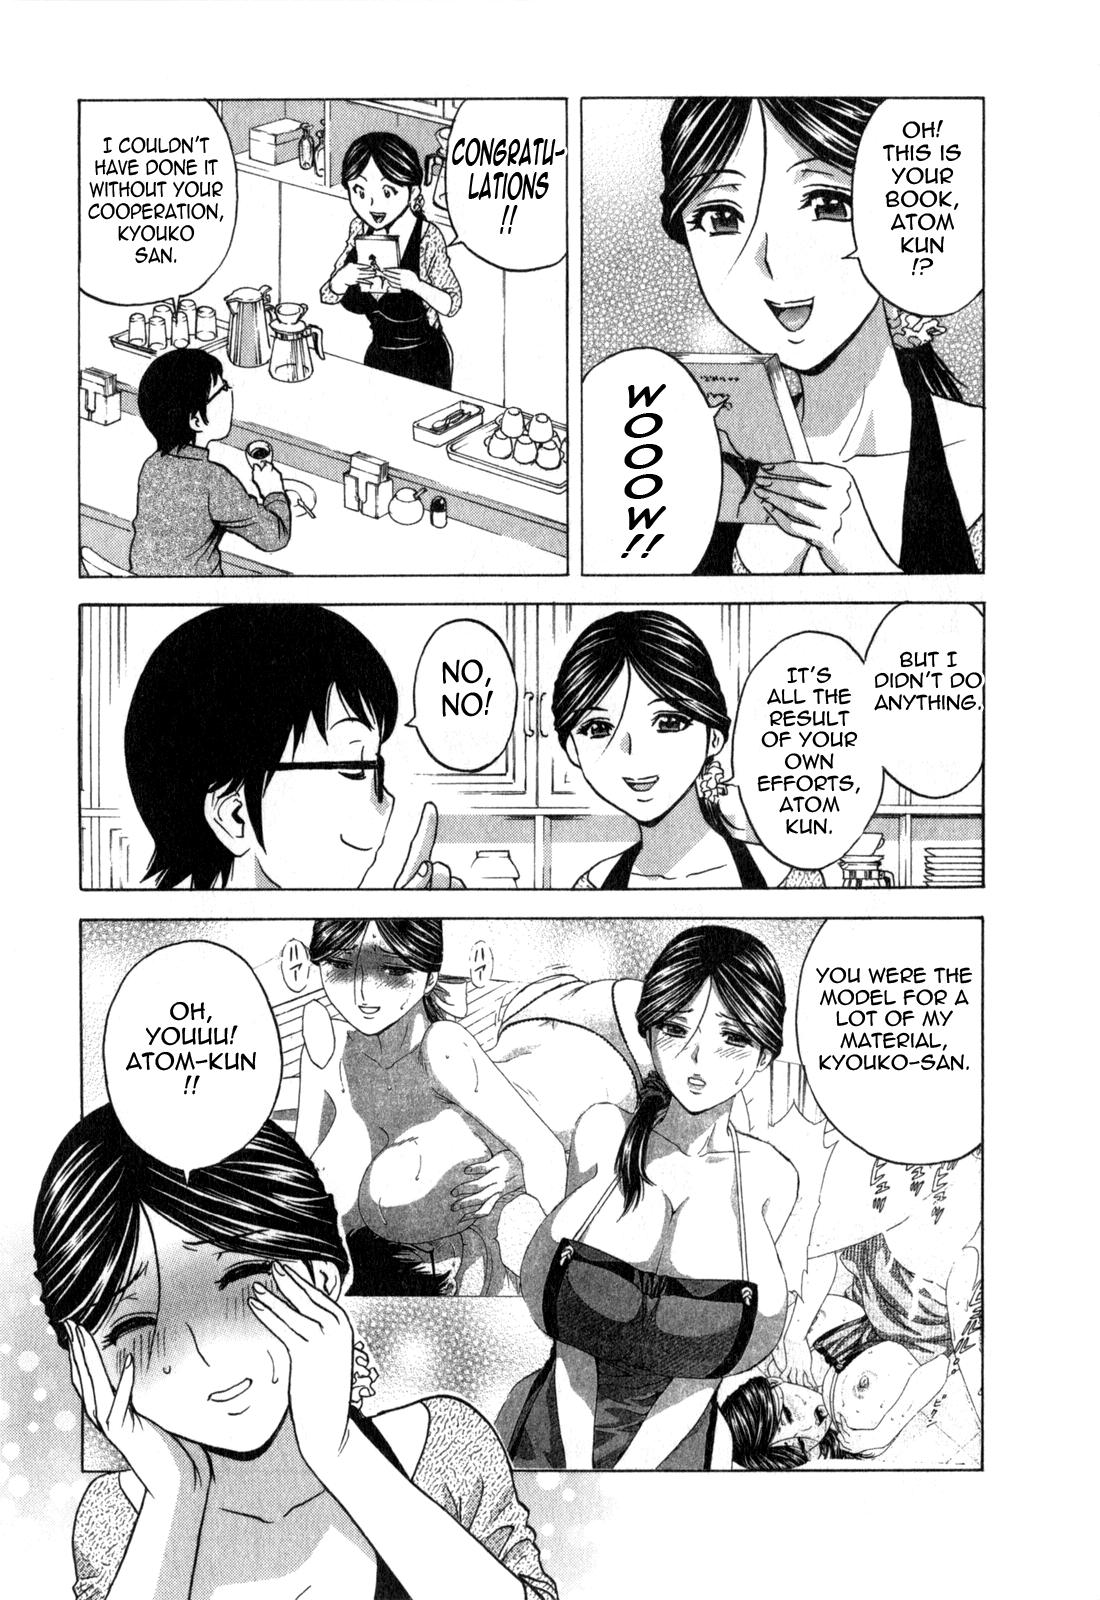 Life with Married Women Just Like a Manga 3 14